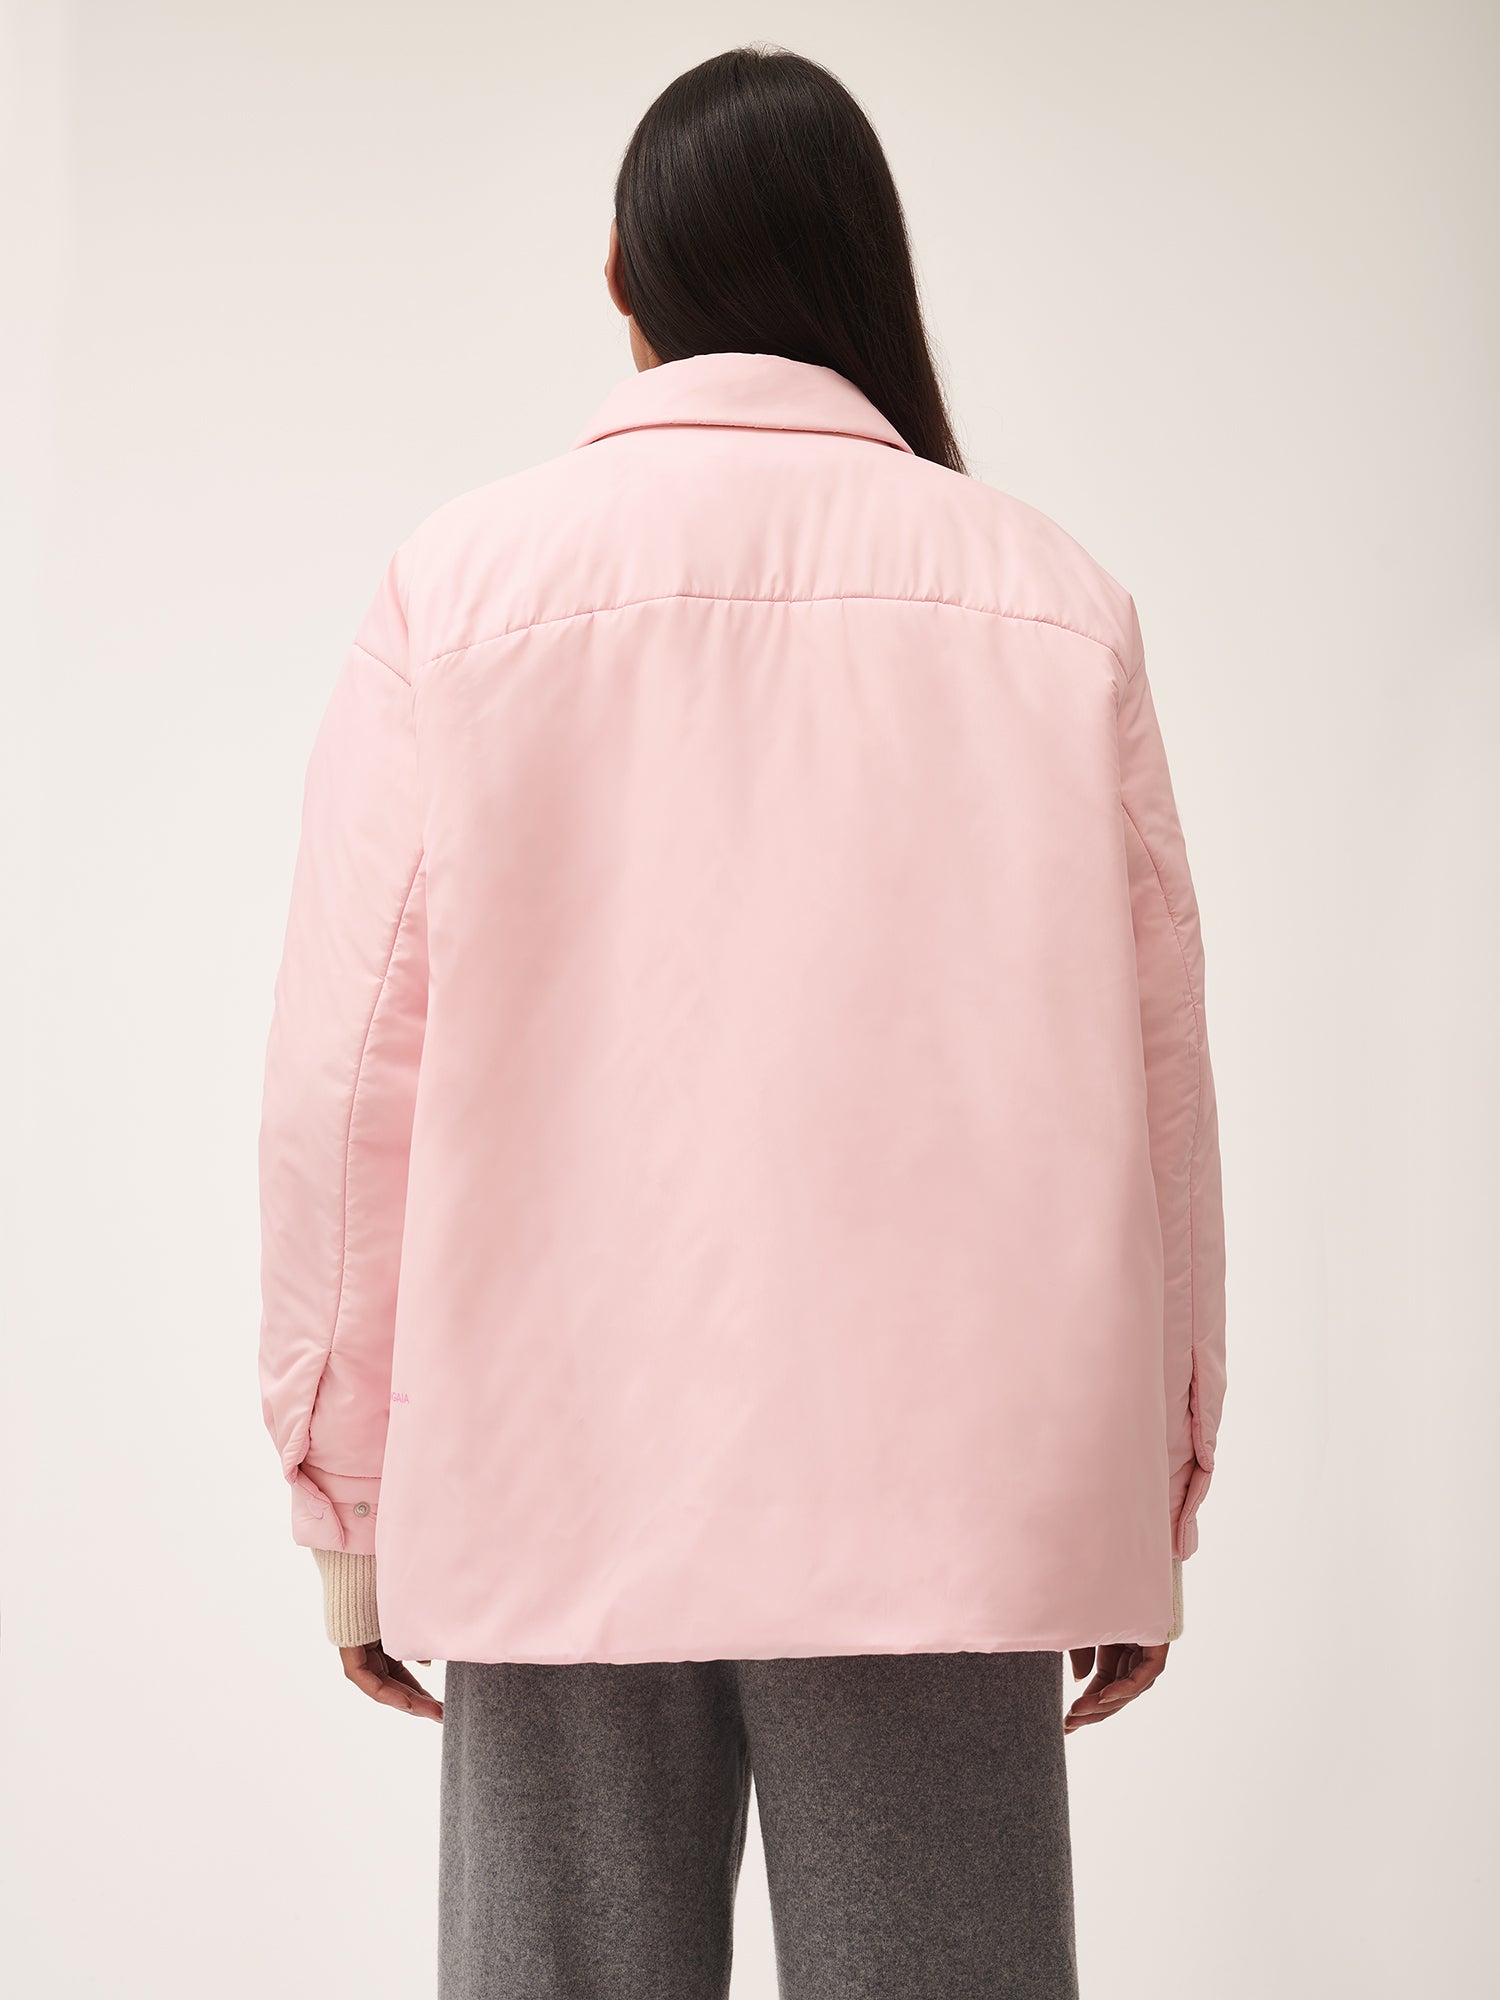 FLWRFLL_Unisex_Shirt_Magnolia_Pink_female-3